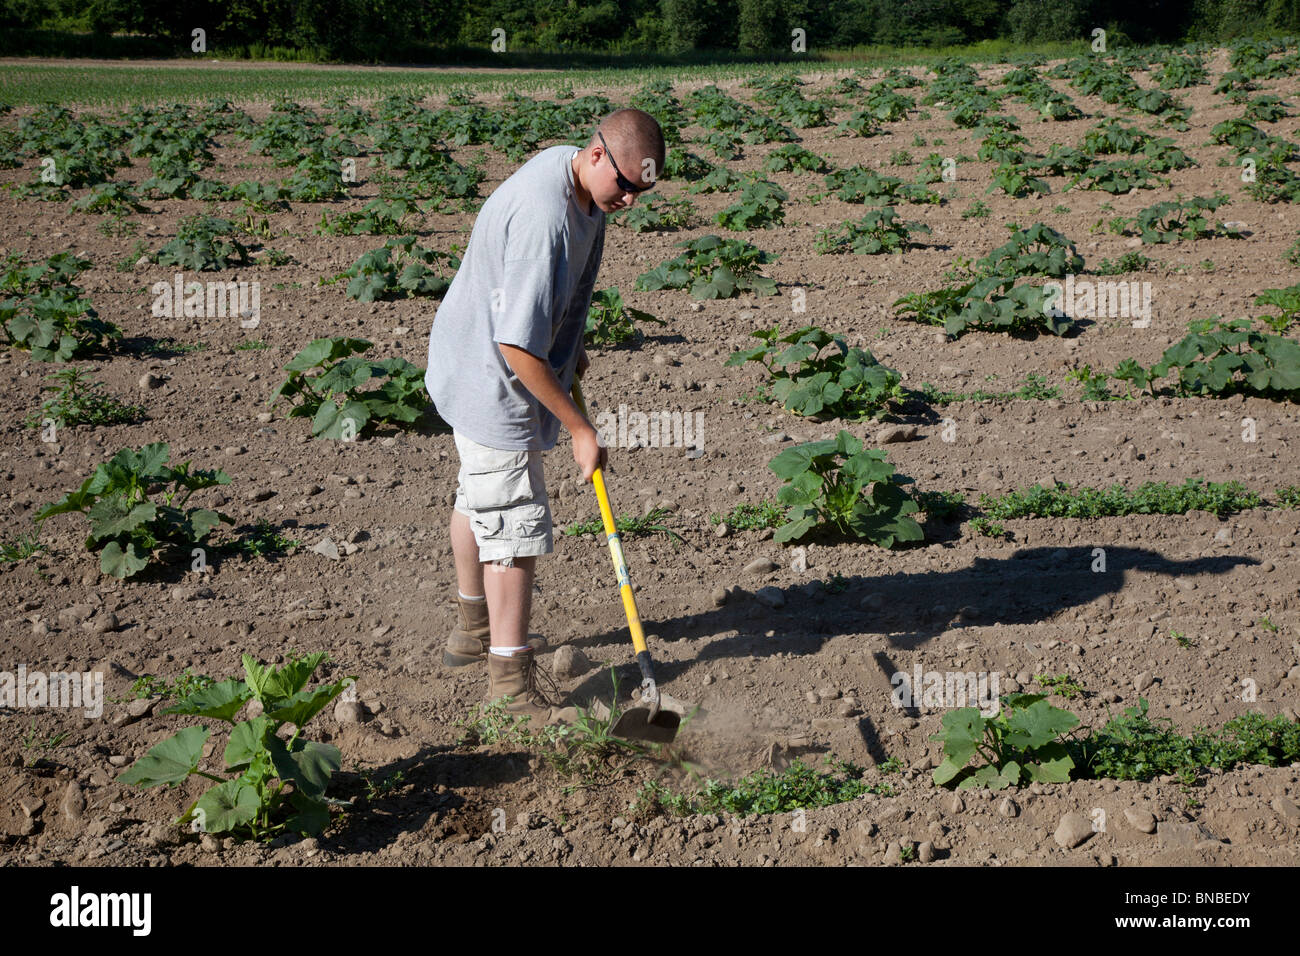 Groton, Massachusetts - A farmer uses a hoe to weed a pumpkin field. Stock Photo